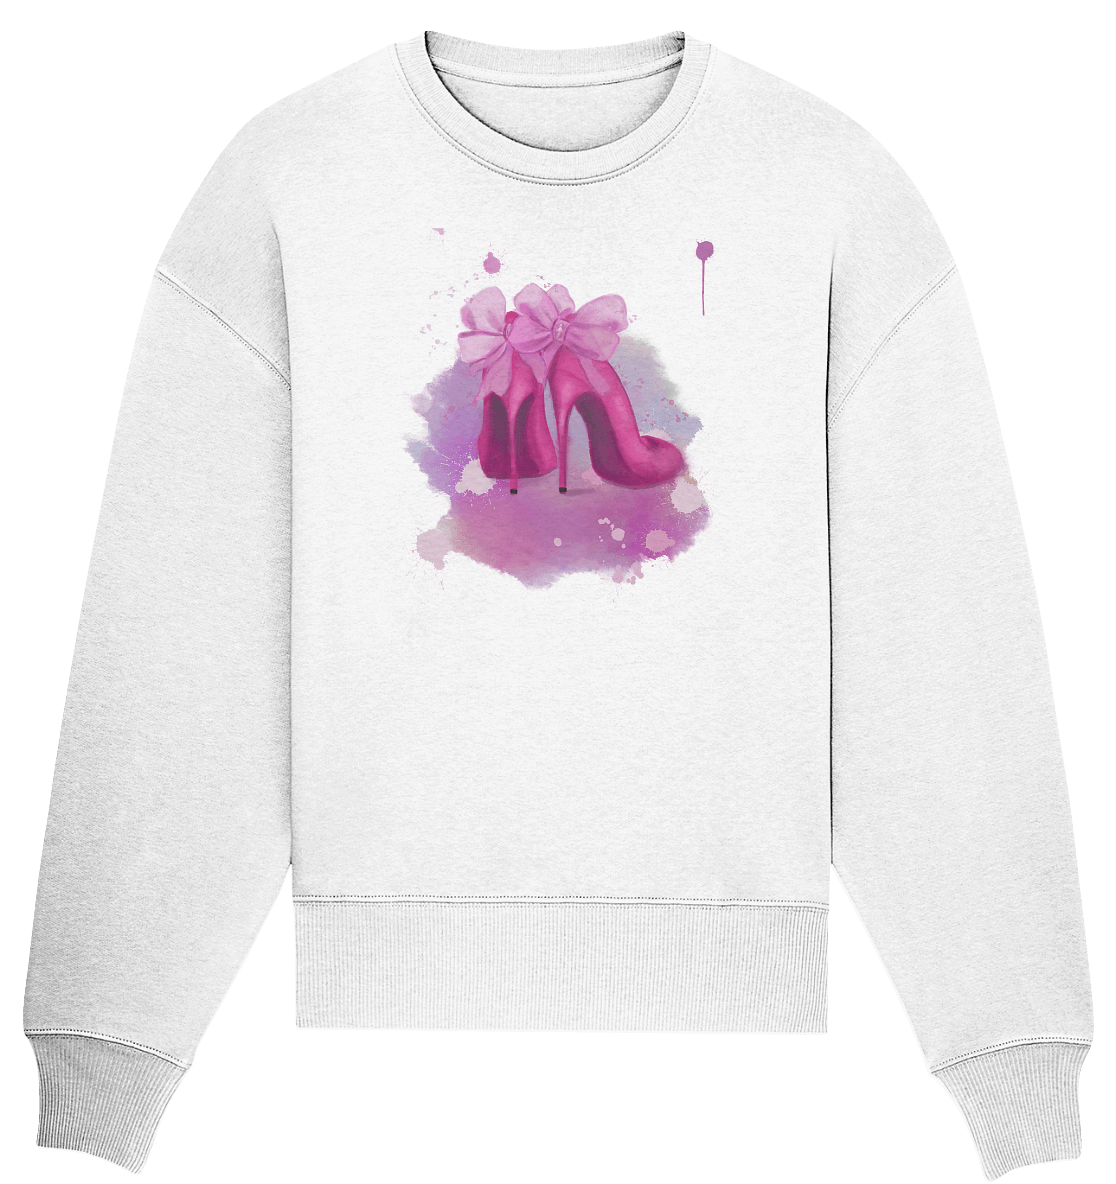 Oversize Sweatshirt Aquarell Heels mit aquarell Muster Print